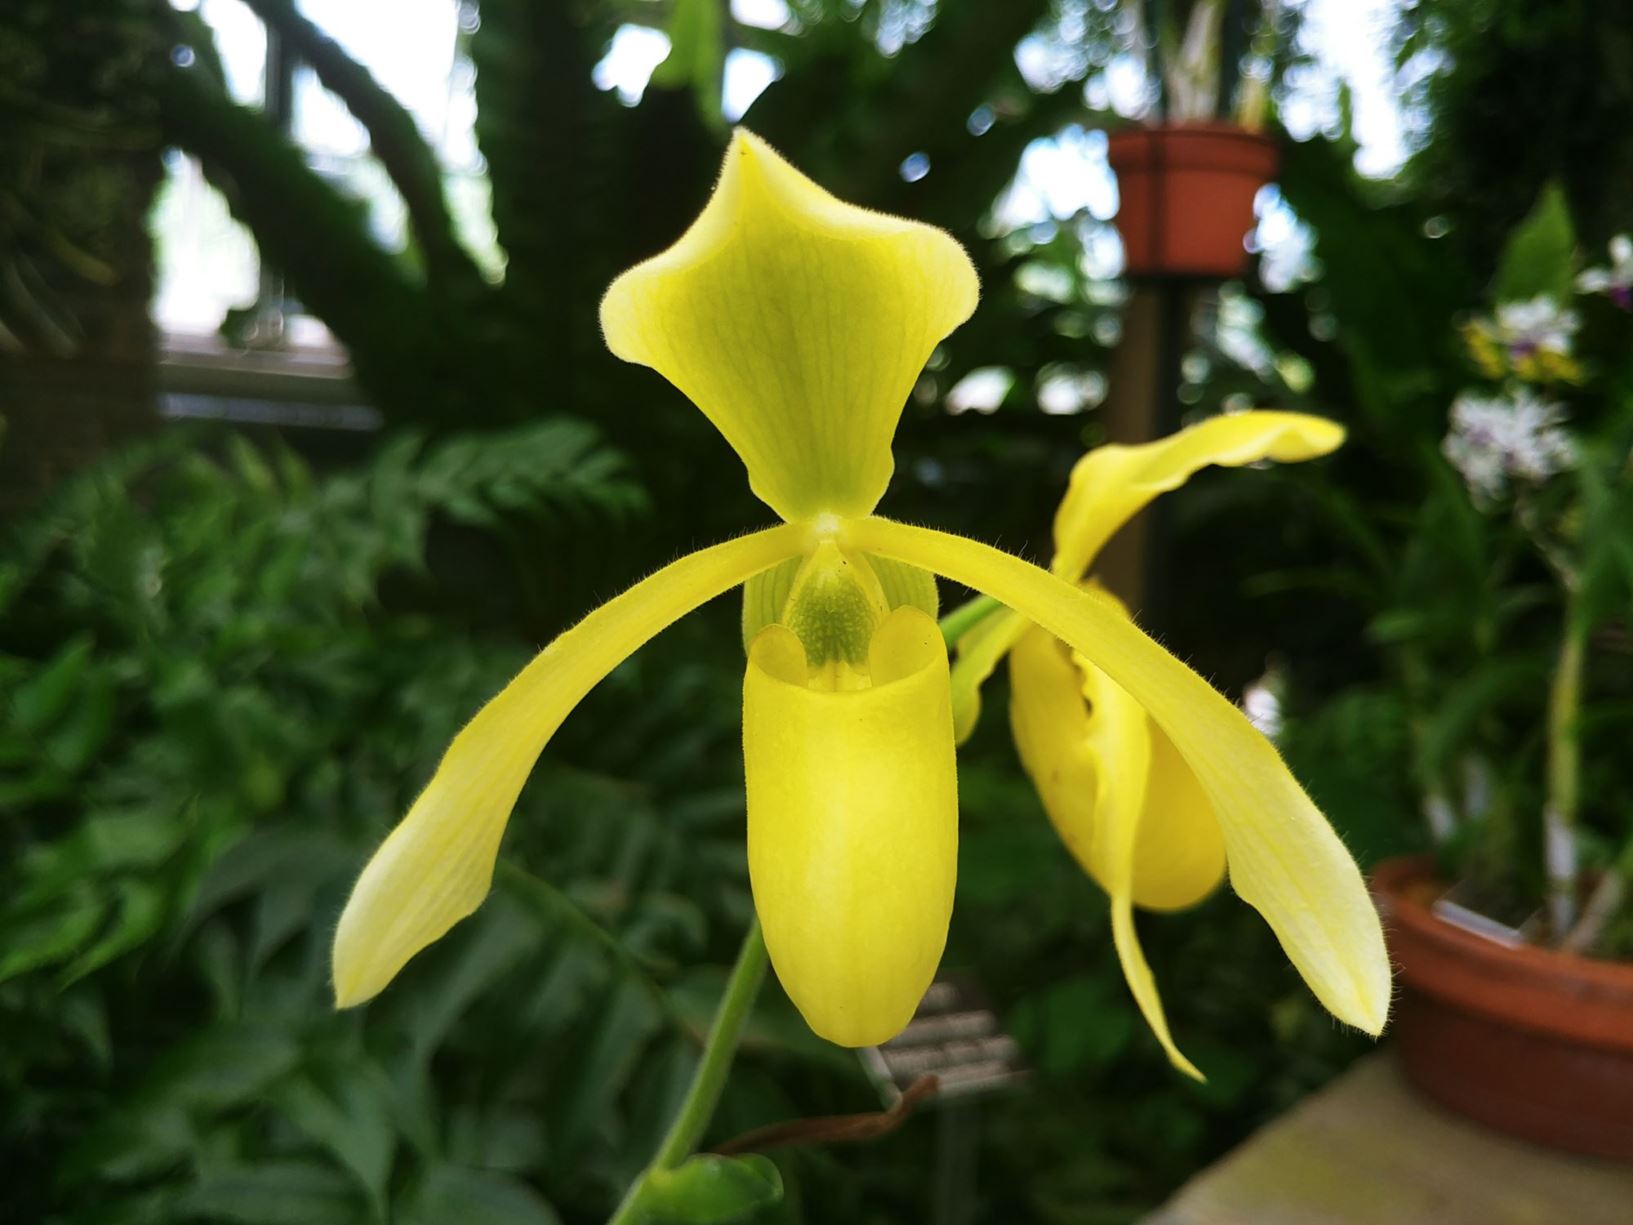 Paphiopedilum Henrietta Fujiwara - slipper orchid